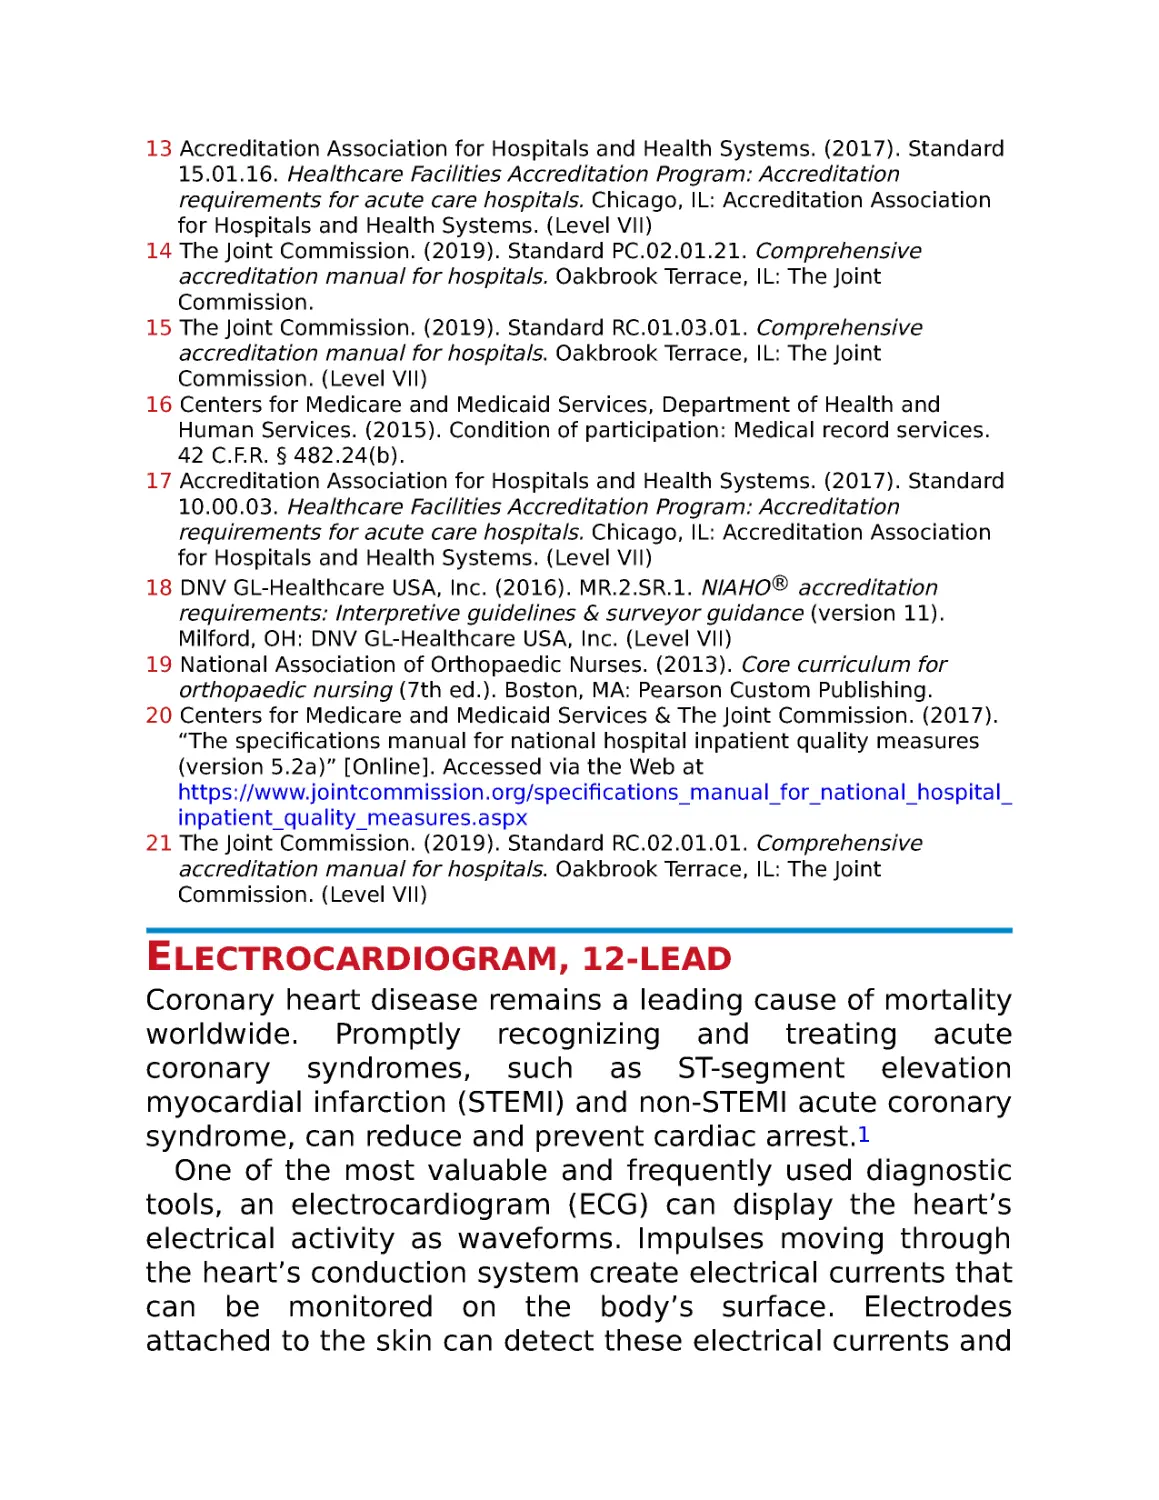 Electrocardiogram, 12-lead